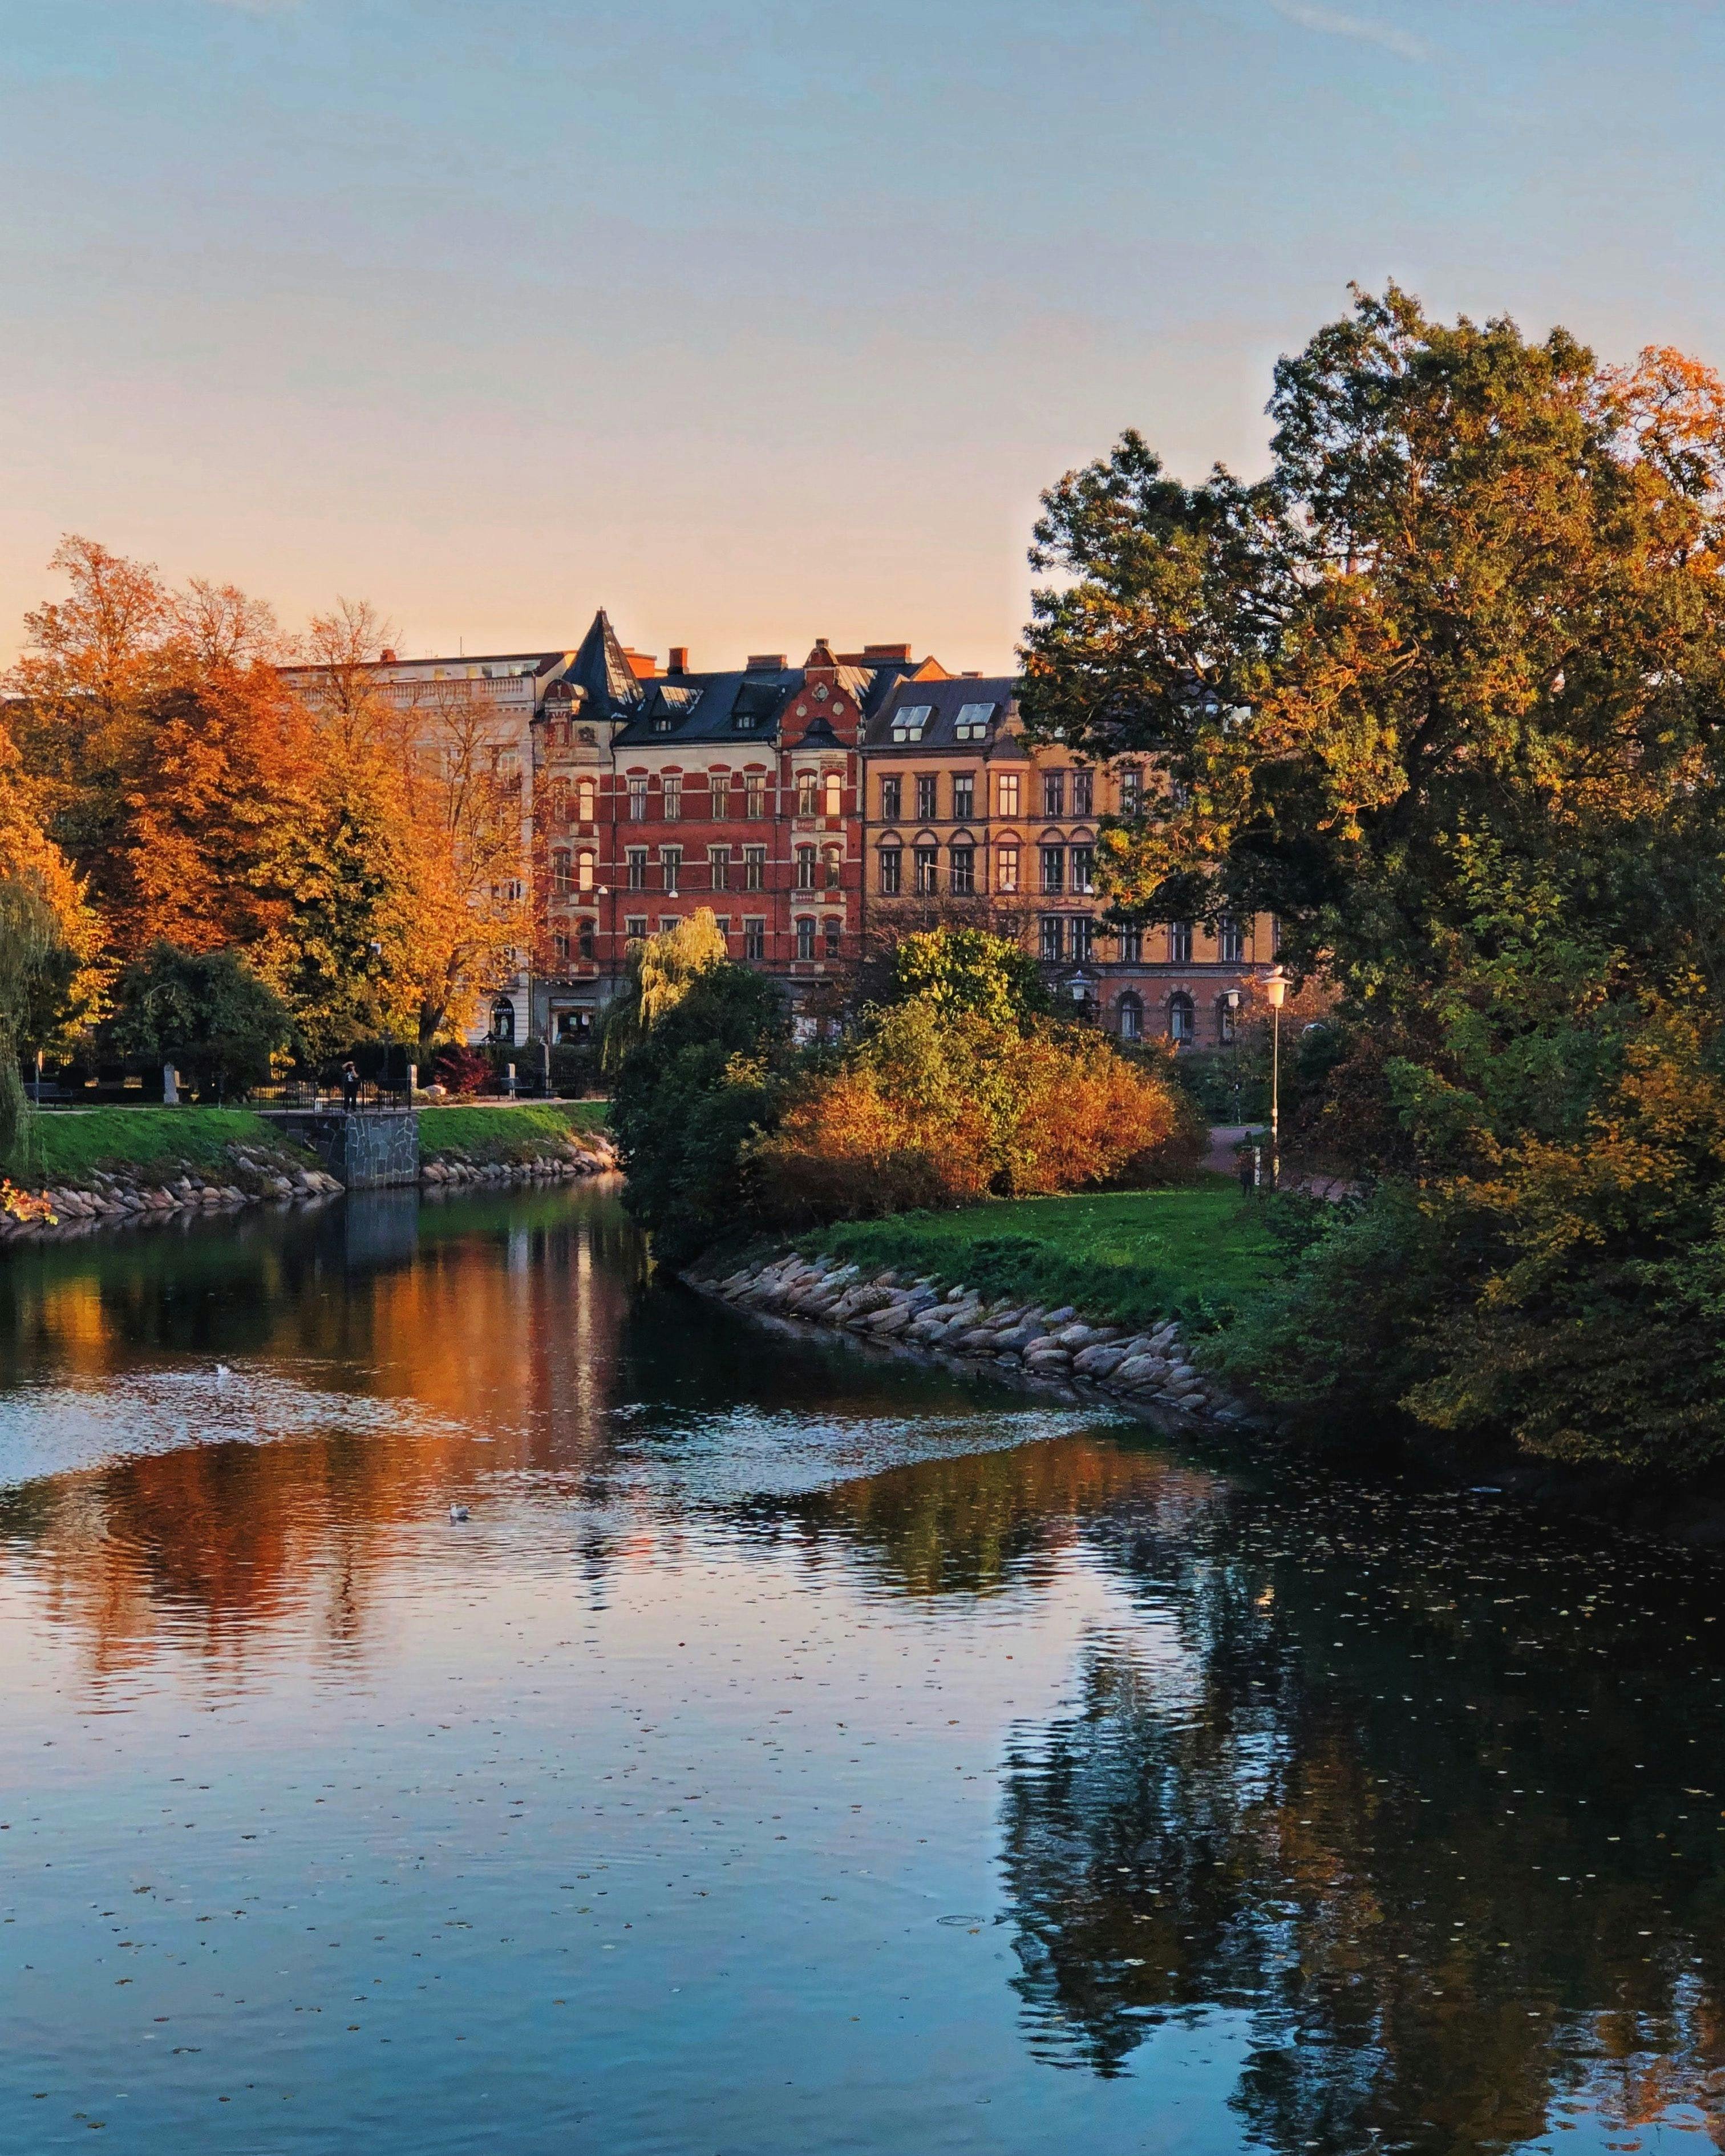 City of Malmö during autumn.